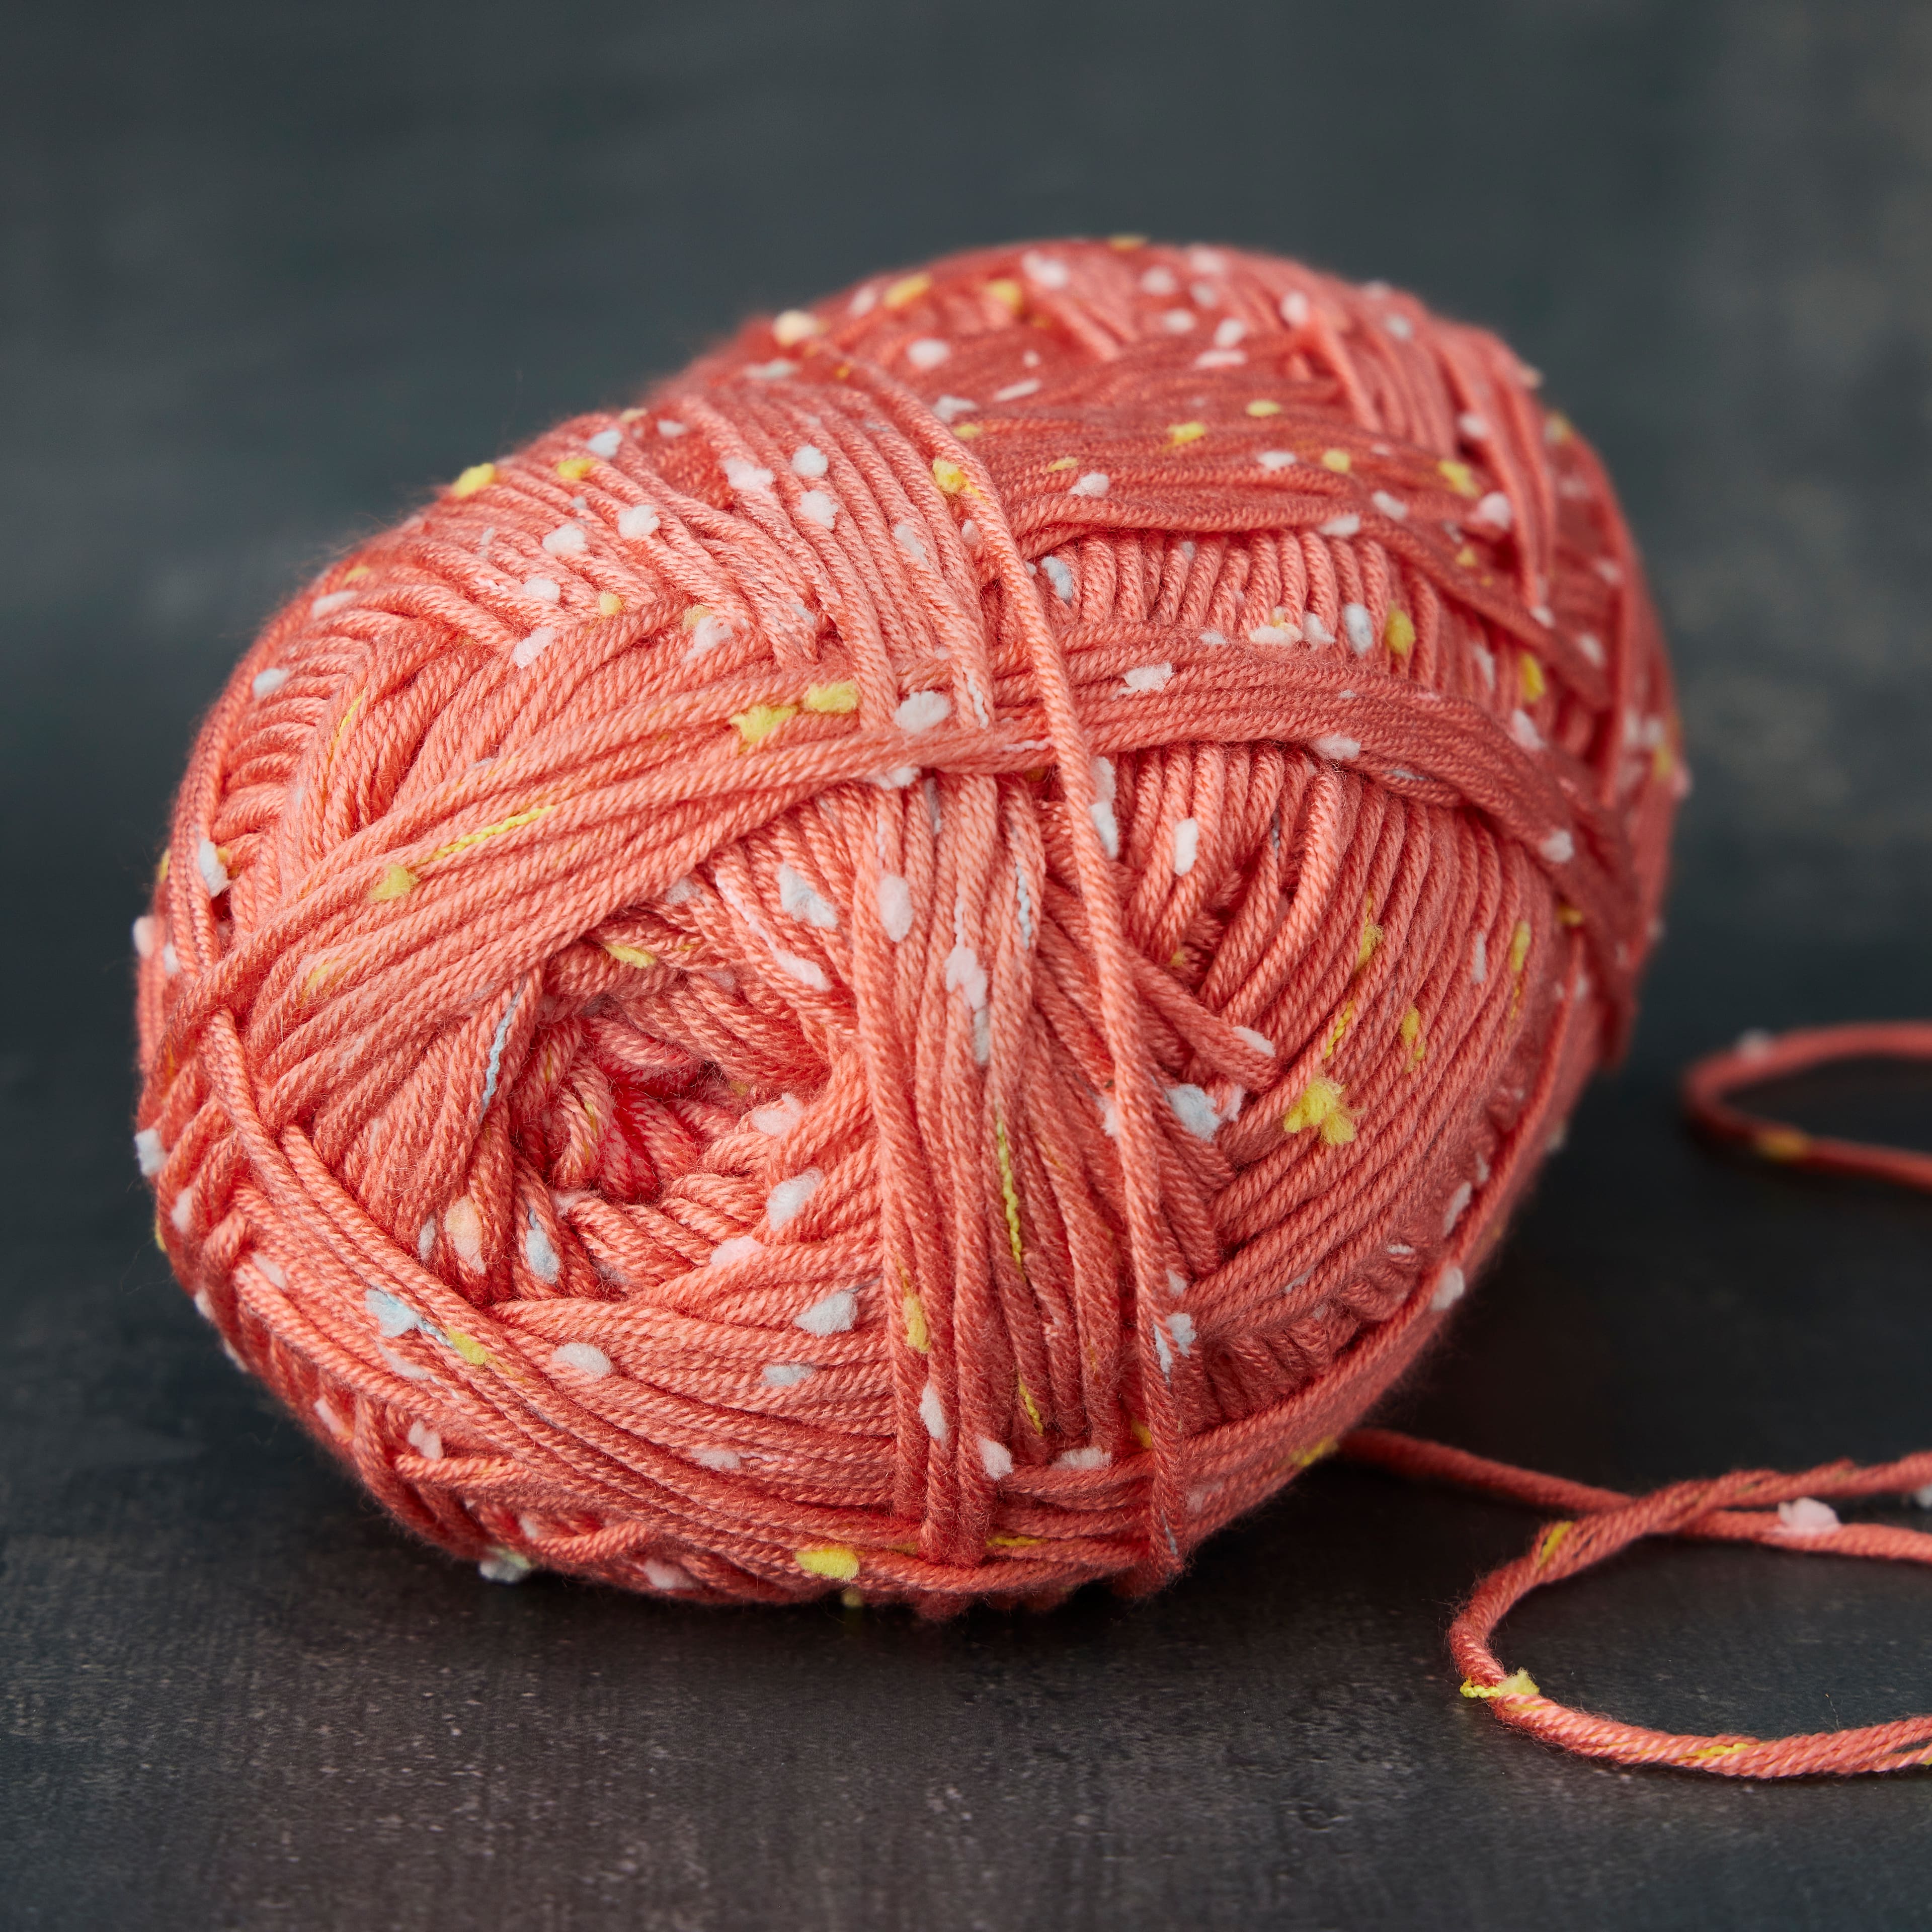 Loops & Threads michaels bulk 18 pack: flecks yarn by loops & threads